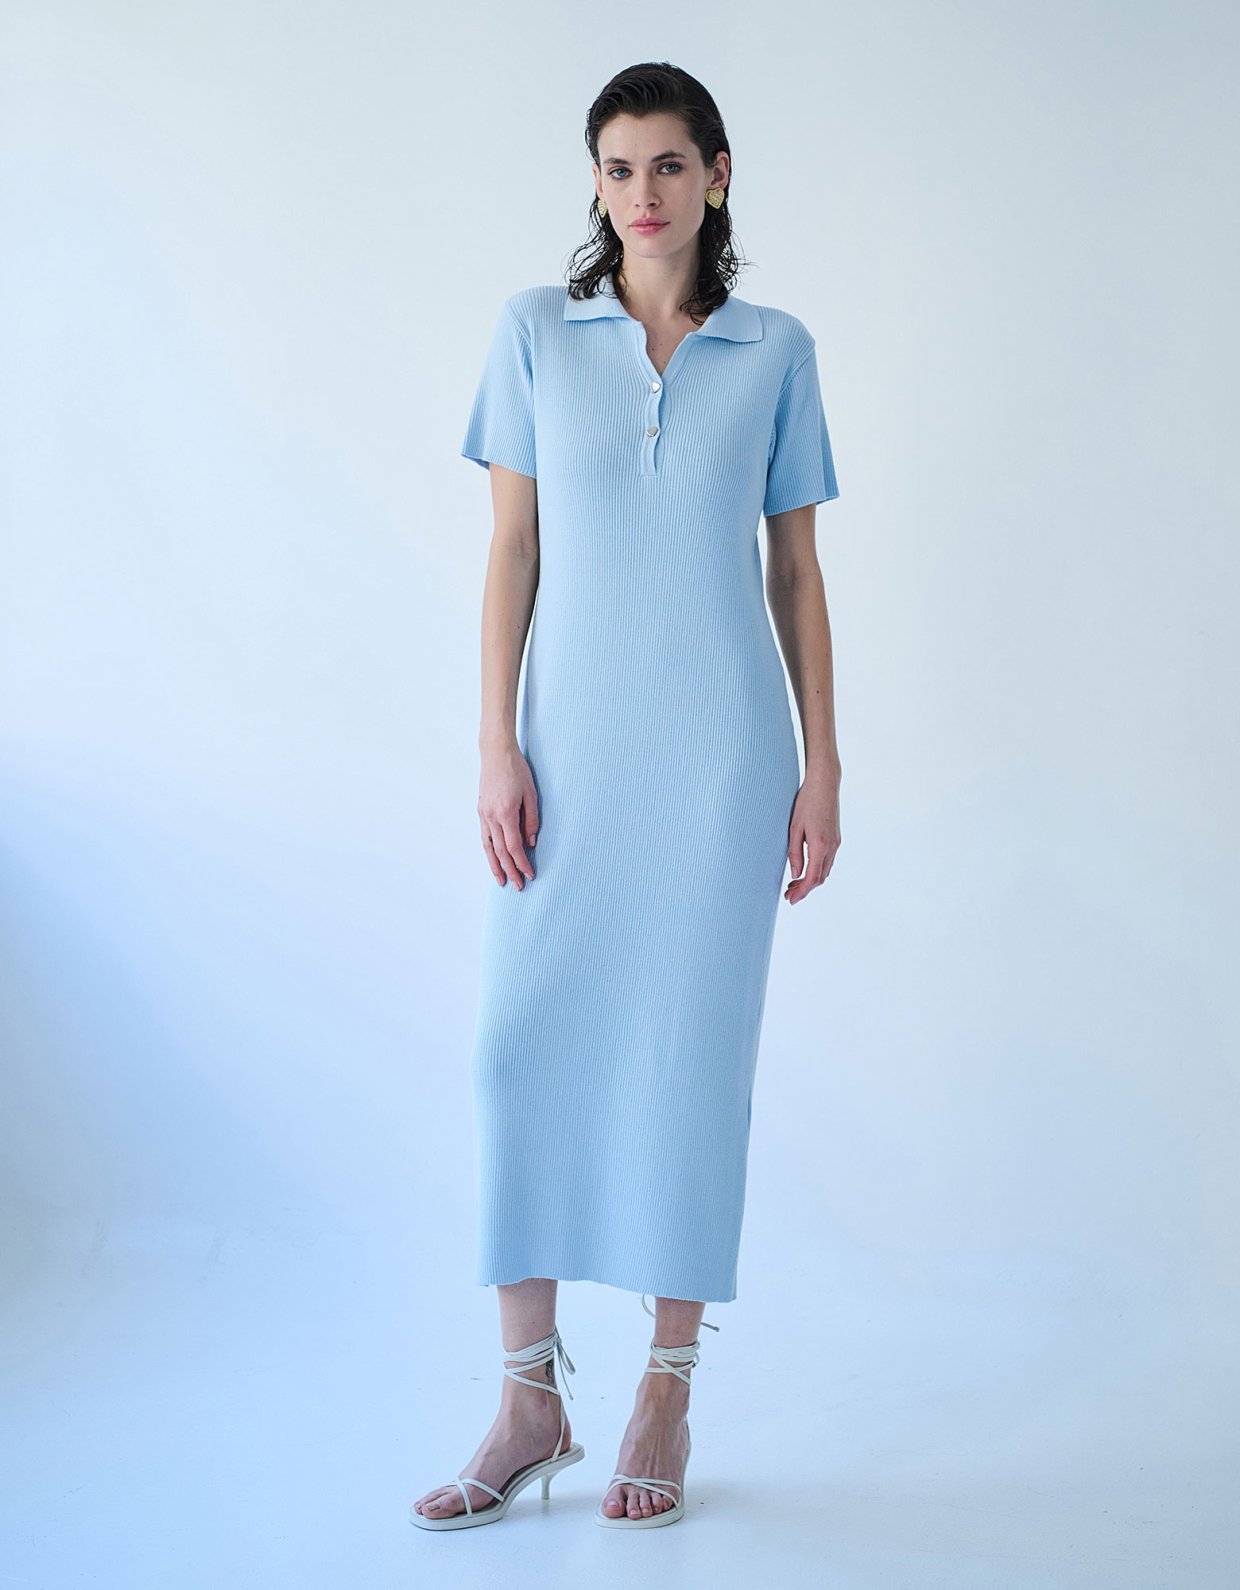 Combos Knitwear Polo midi dress light blue